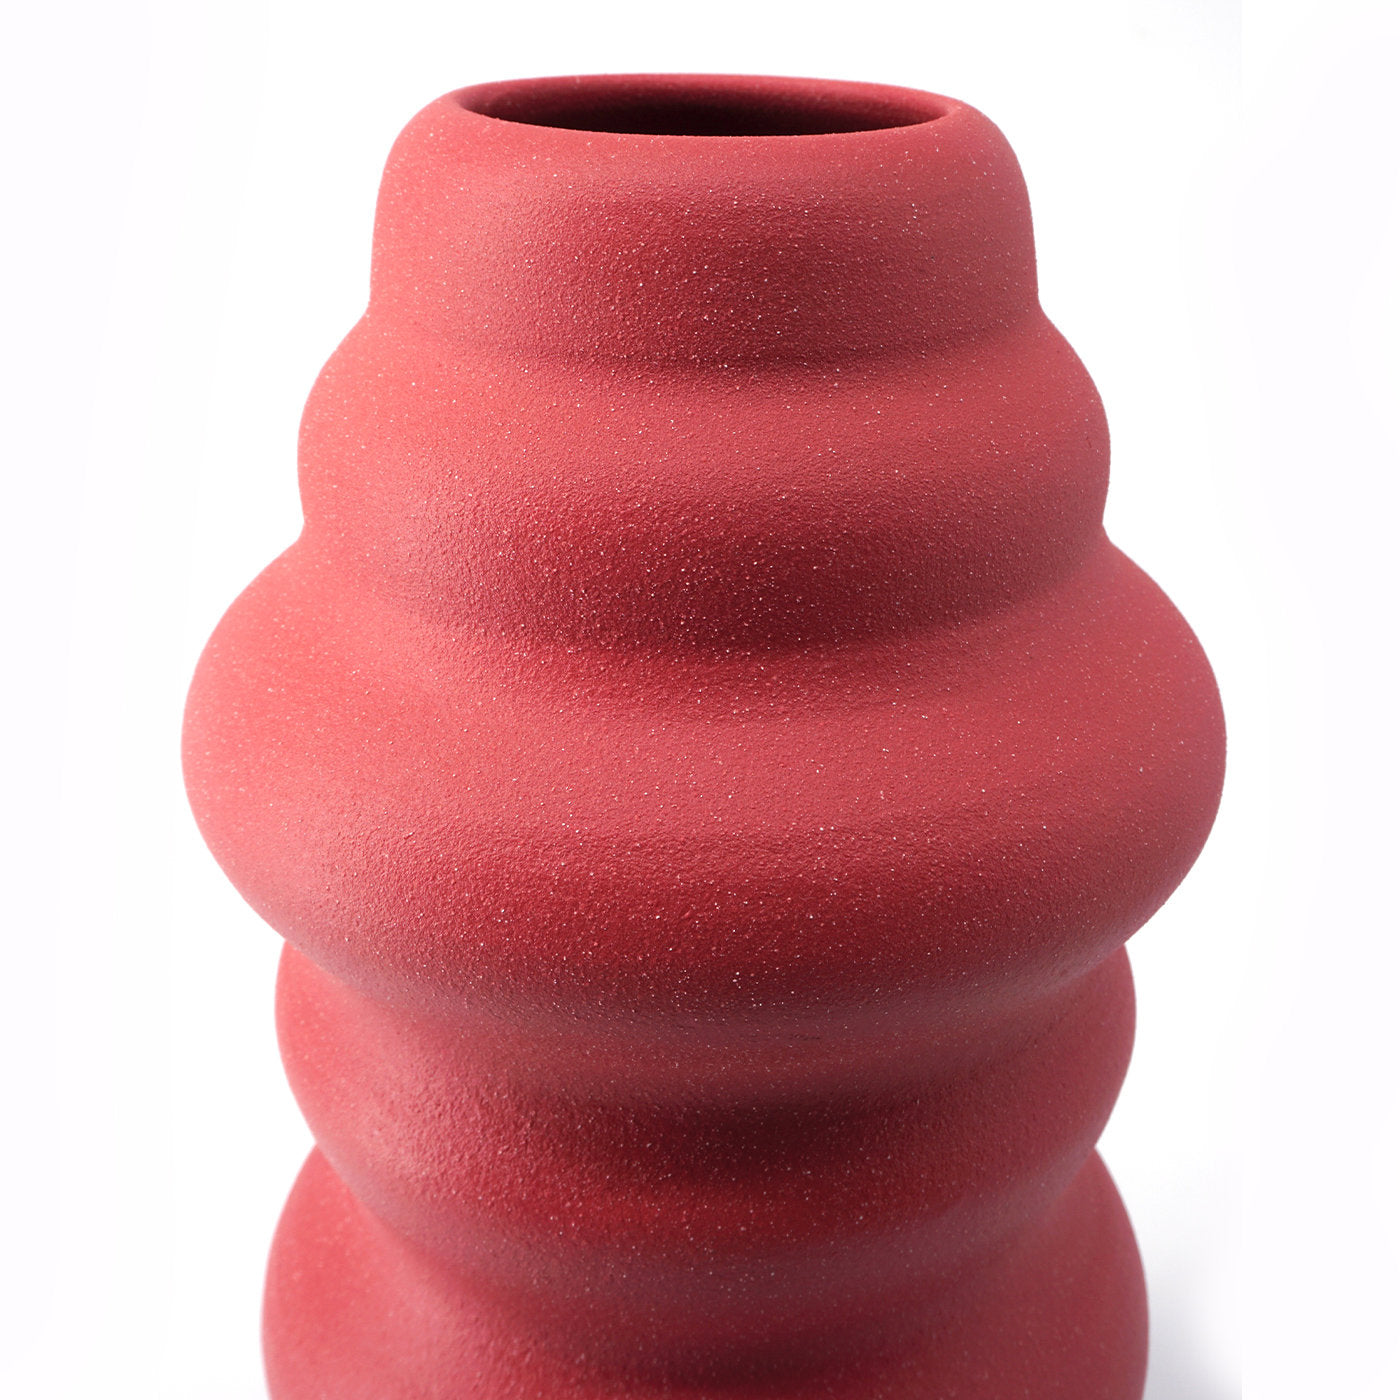 Crisalide Red Vase #8 - Alternative view 1